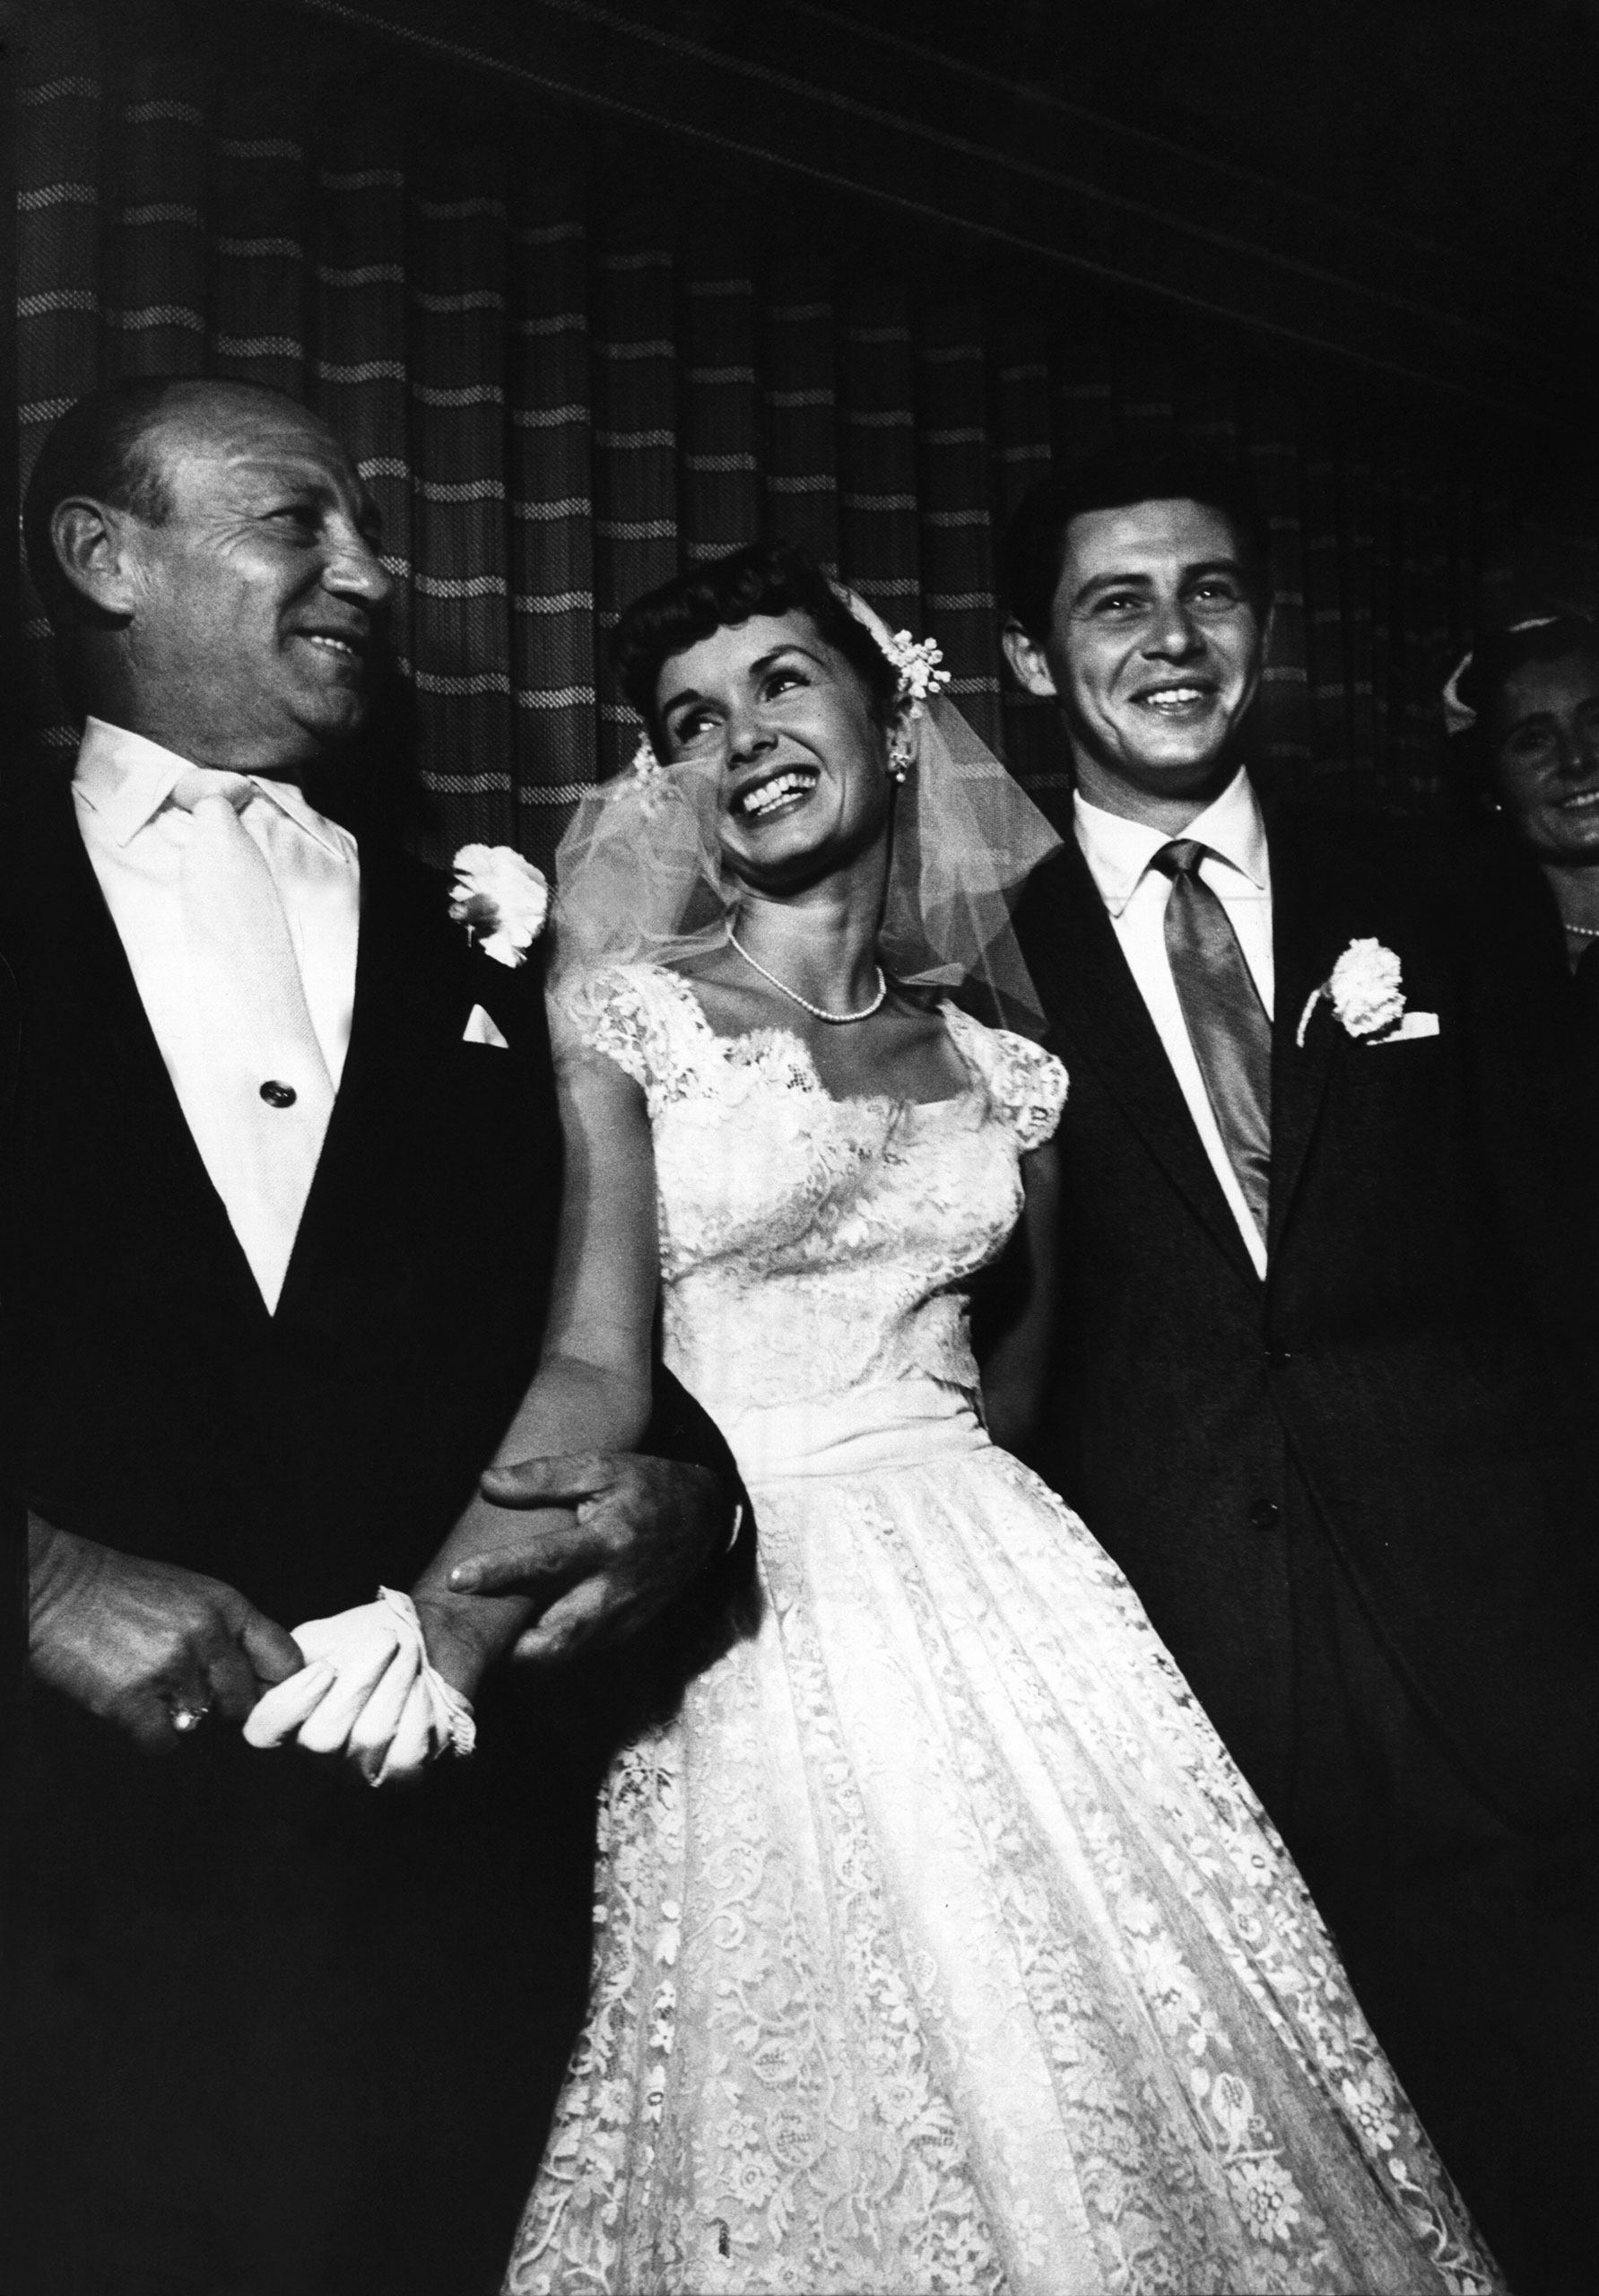 Wedding of Debbie Reynolds and Eddie Fisher, 1955